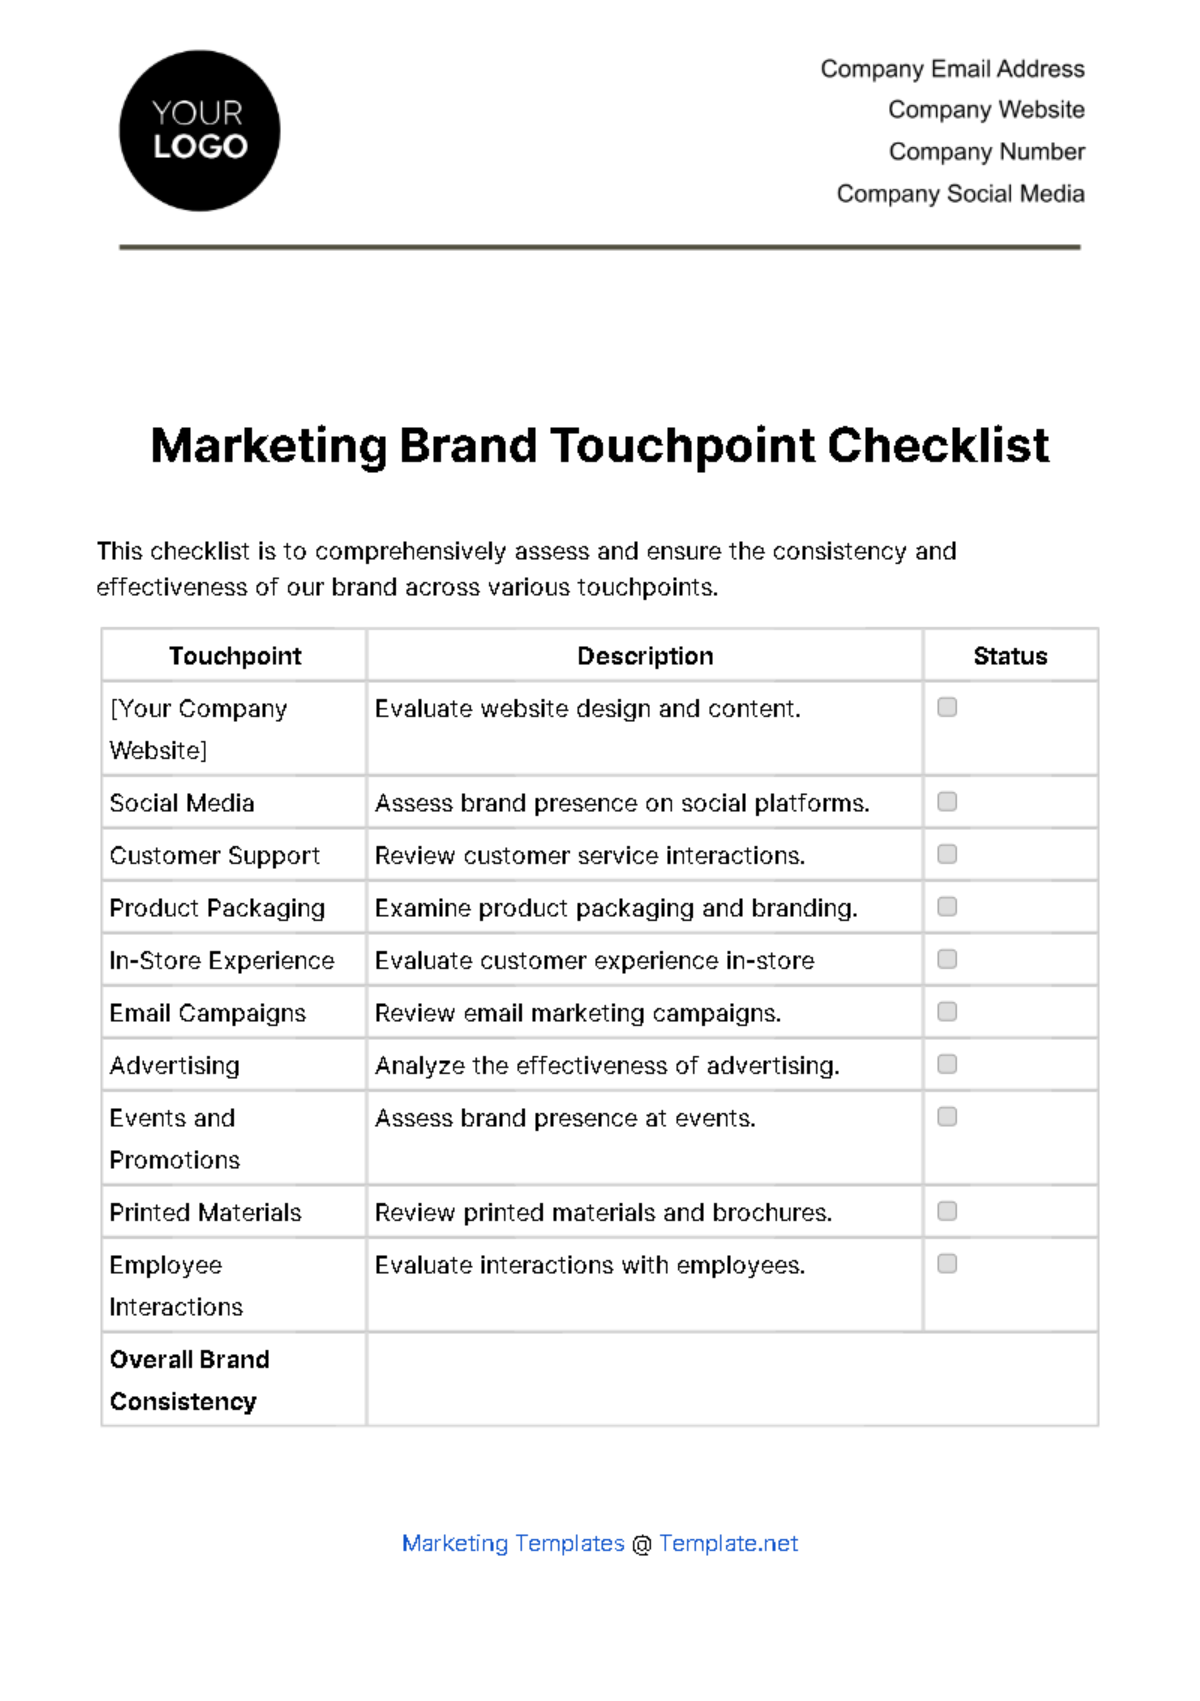 Free Marketing Brand Touchpoint Checklist Template